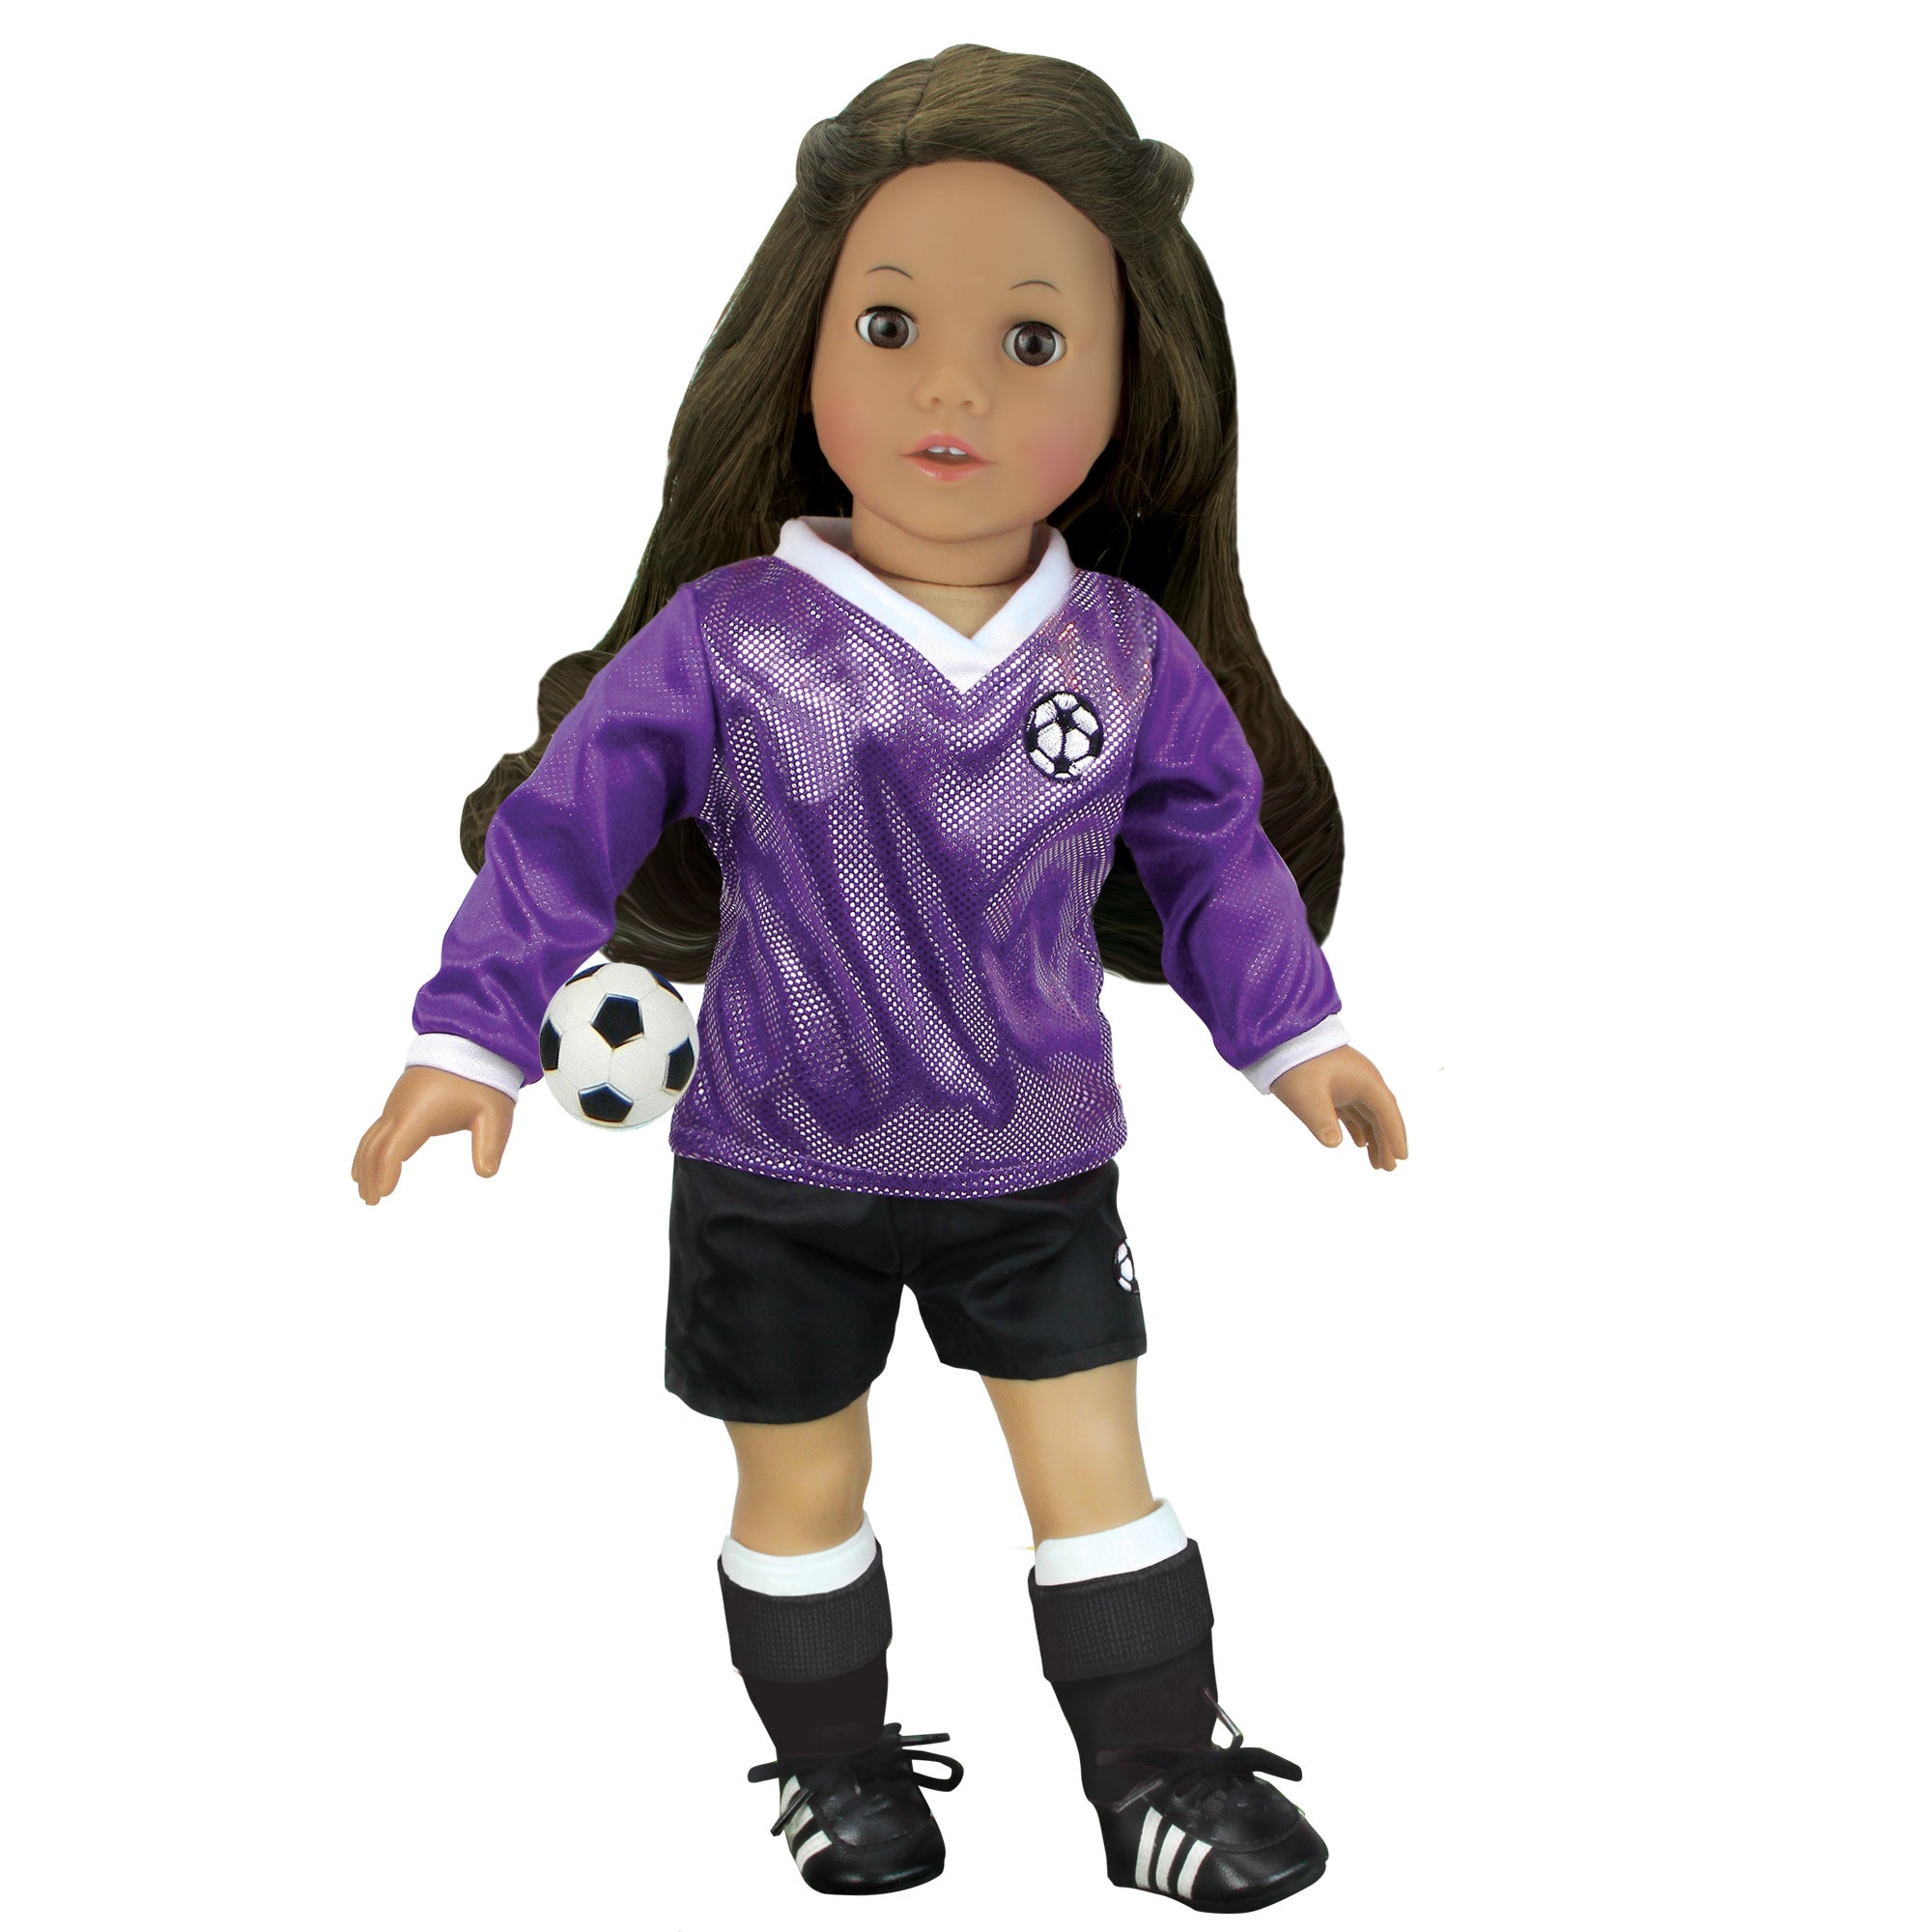 Sophias Doll Soccer Outfit 6-Piece Set with Ball for 18" Dolls